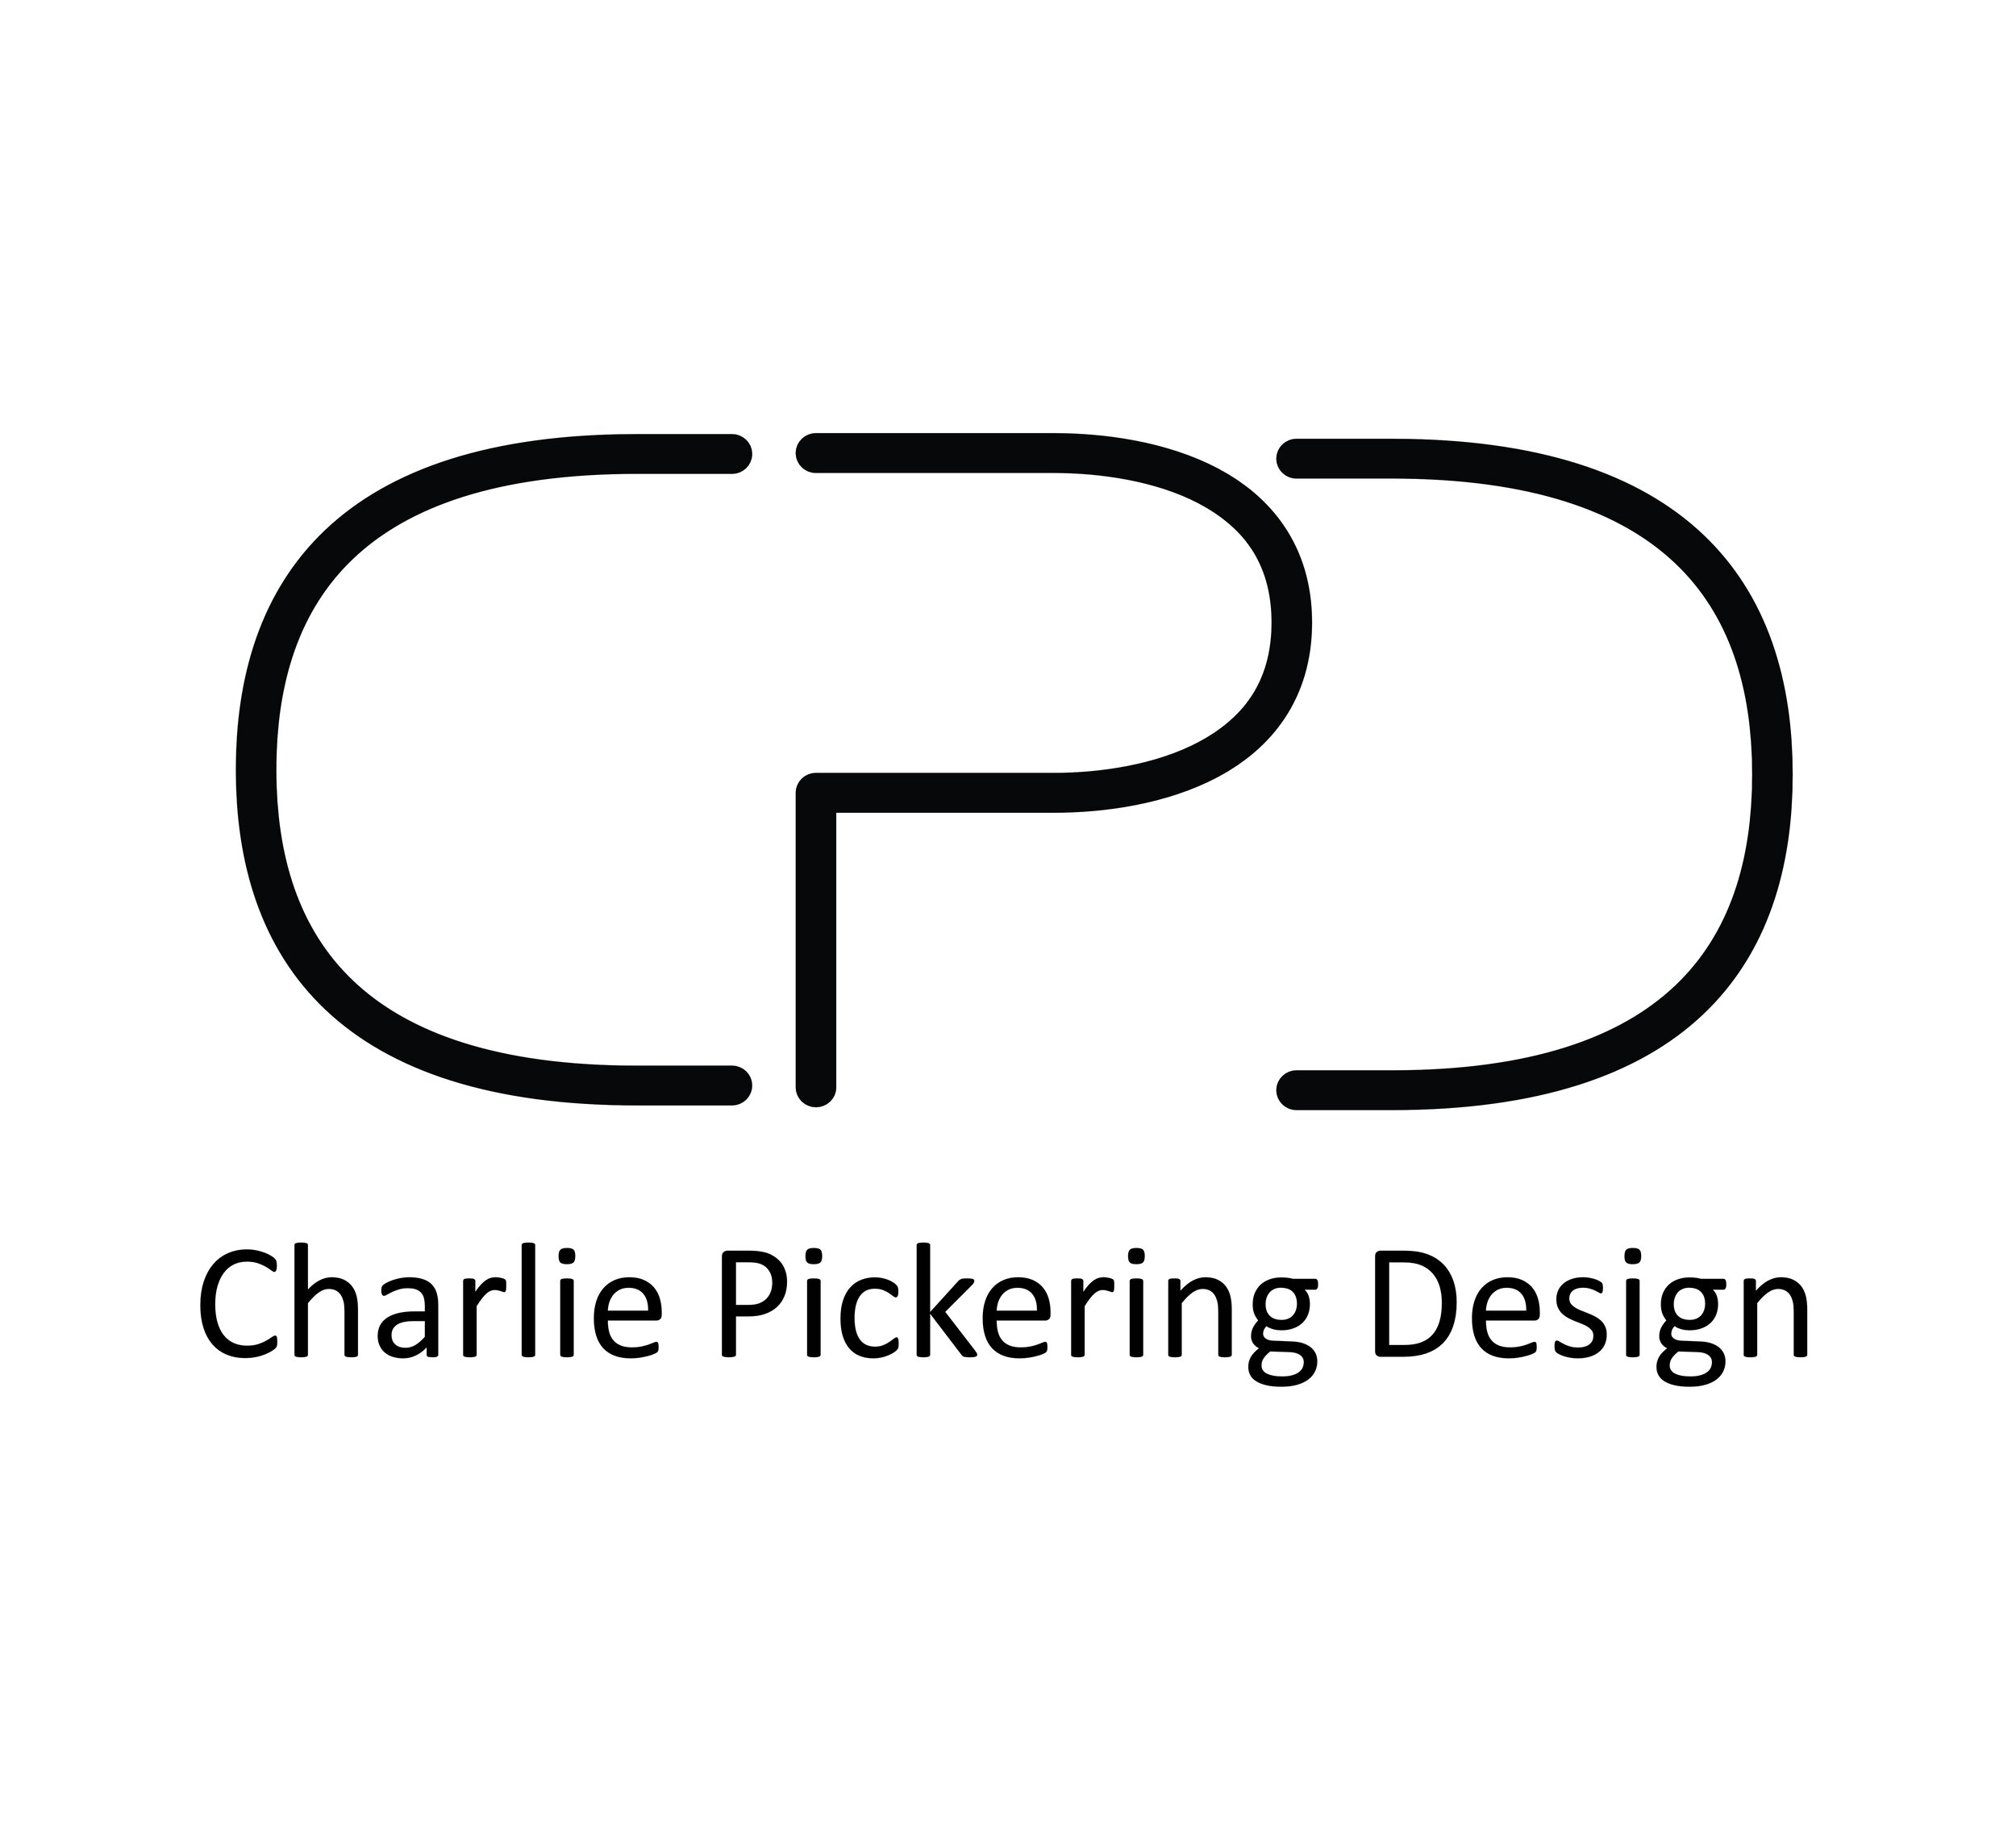 Charlie Pickering Design - Custom Furniture &amp; Goods From Surrey, UK